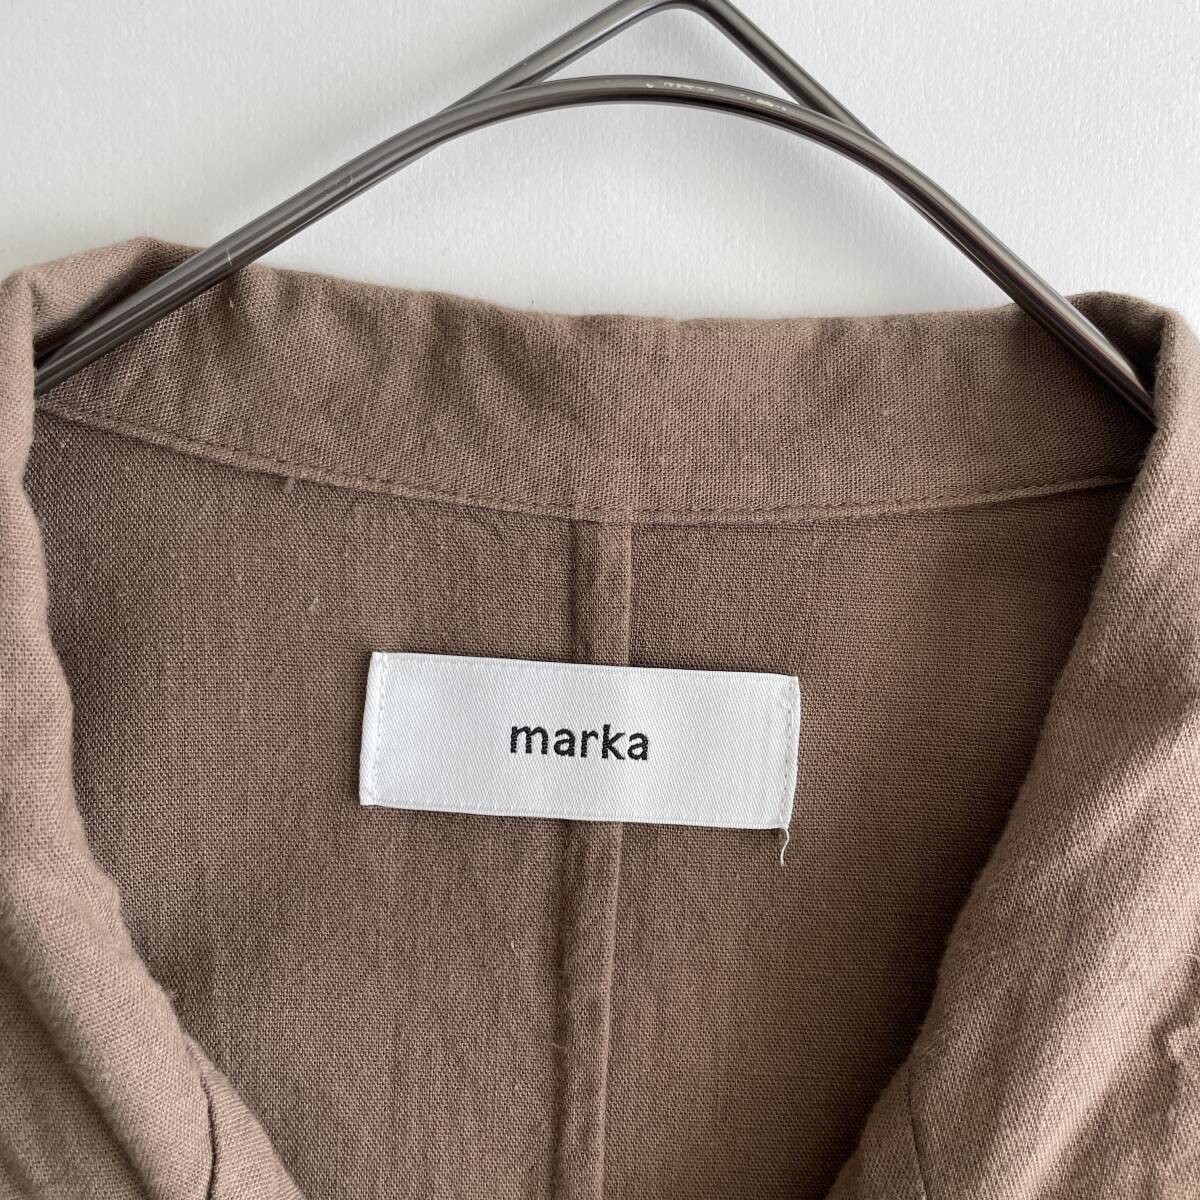 marka -SHIRT COAT- size/2 (te) весна лето ma-ka рубашка пальто длинный рукав springs over хлопок внешний магазин следы lie Work 